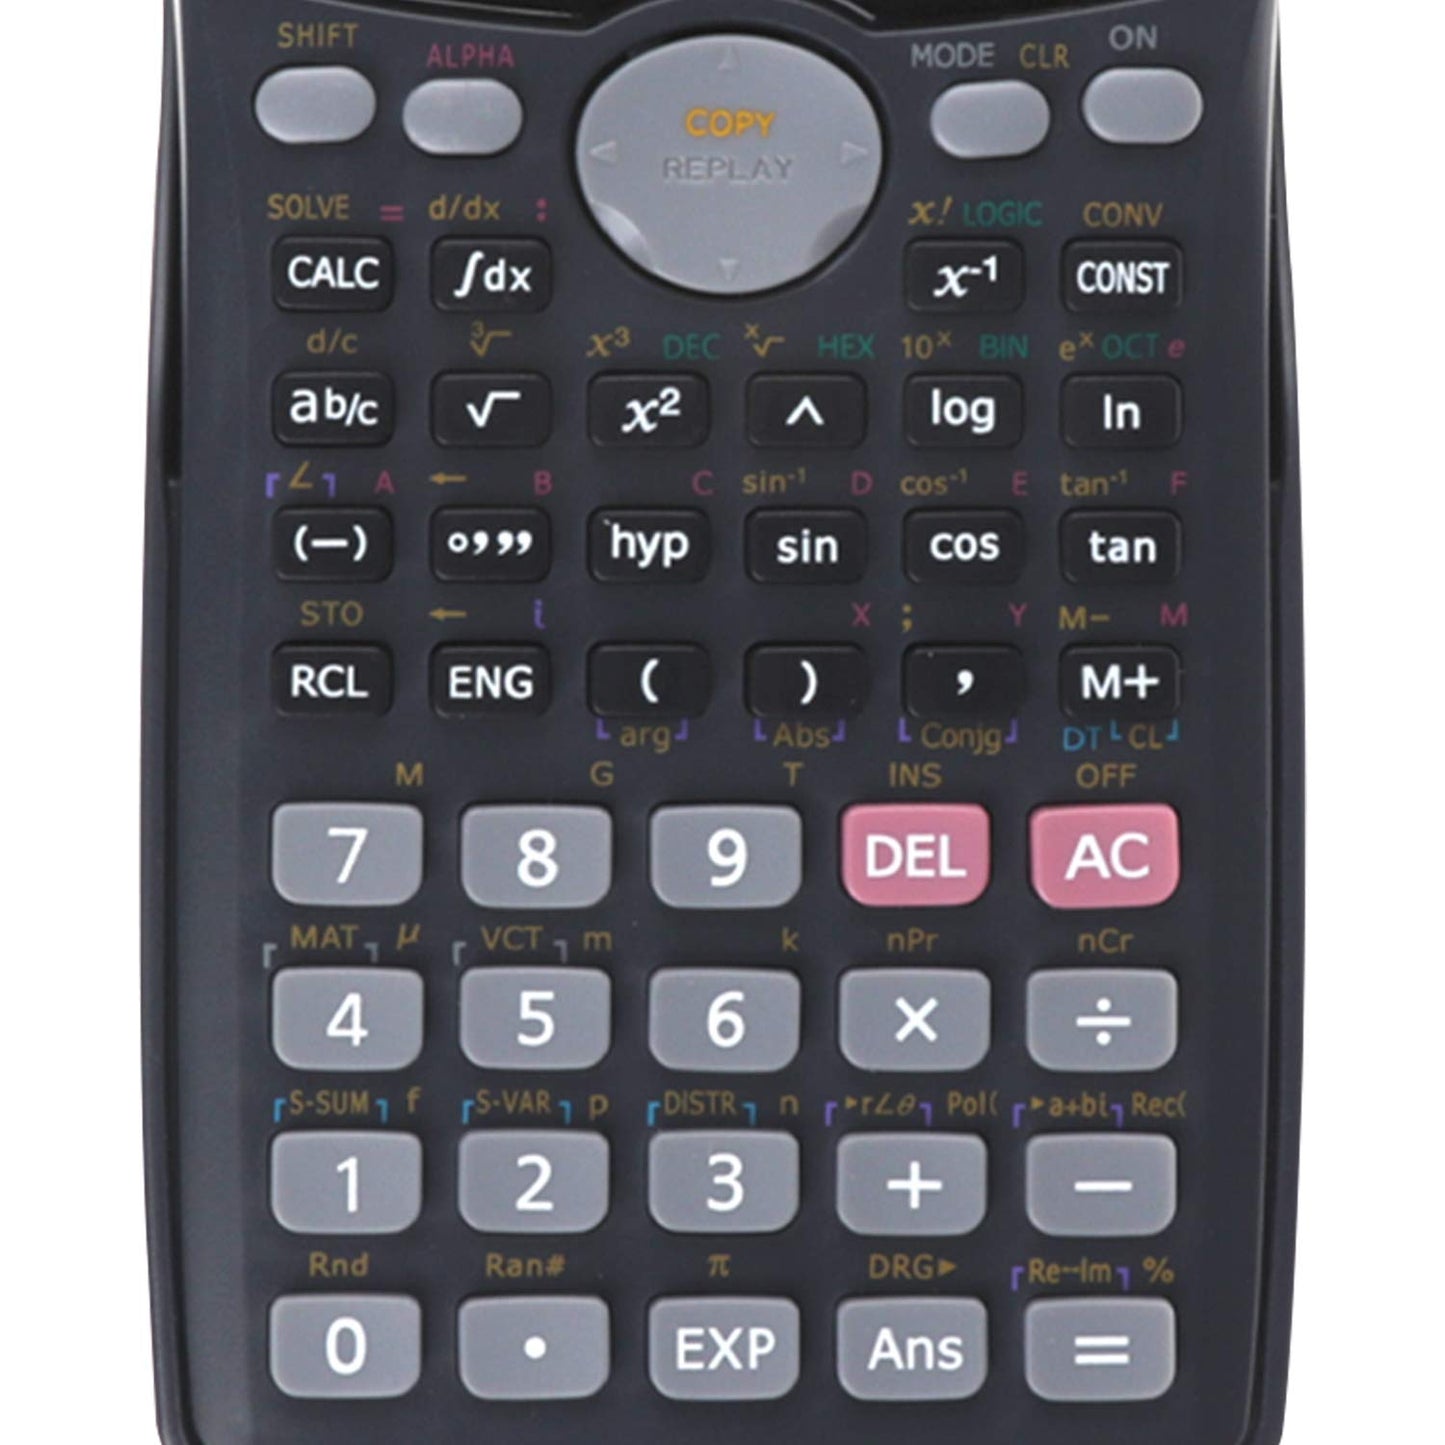 MP - Scientific Calculator with 204 Functions - Black